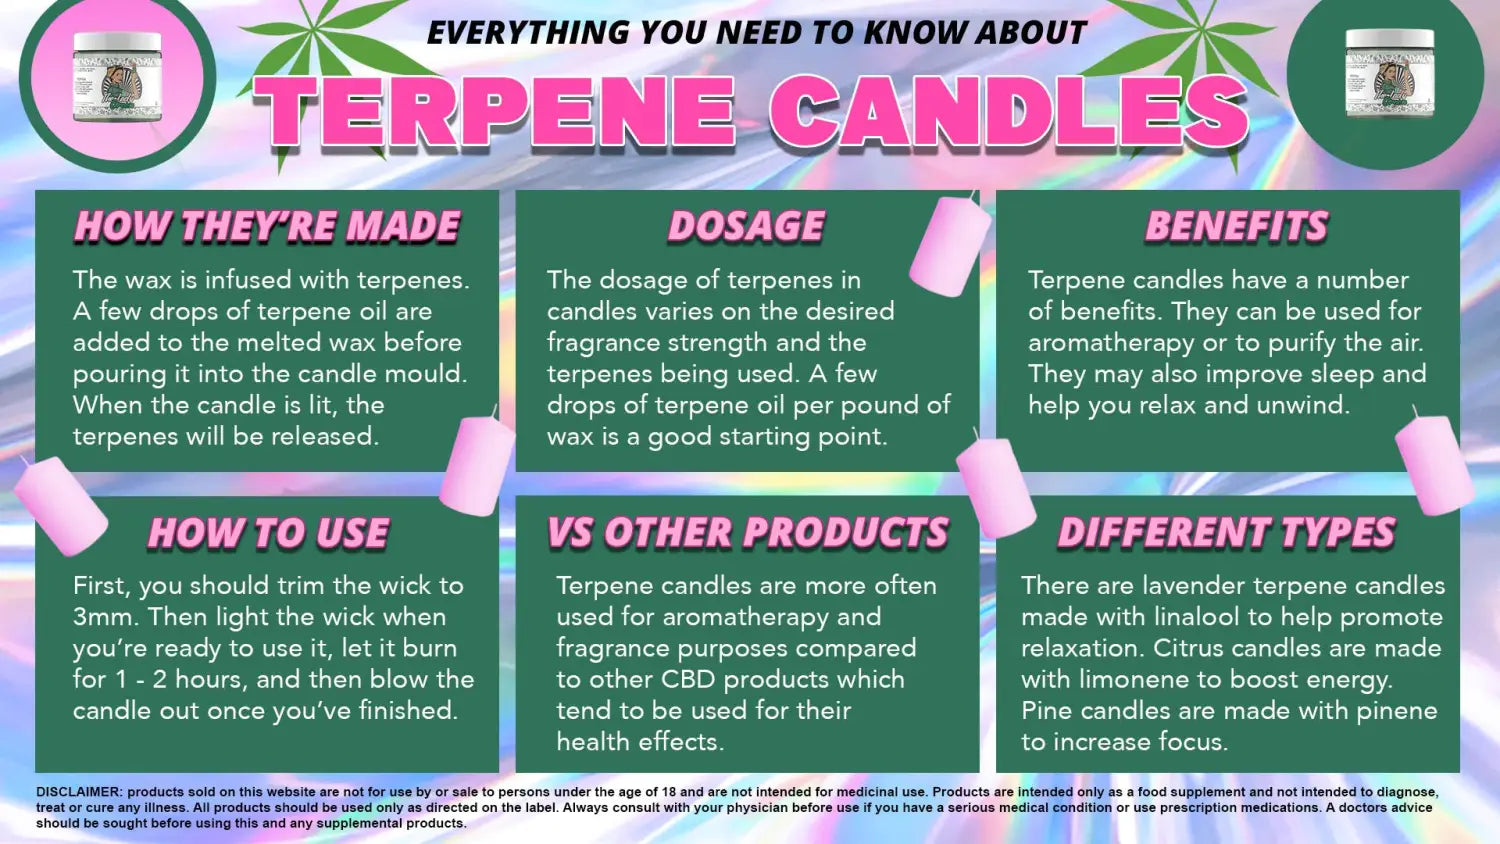 Terpene candles UK Shopping Guide